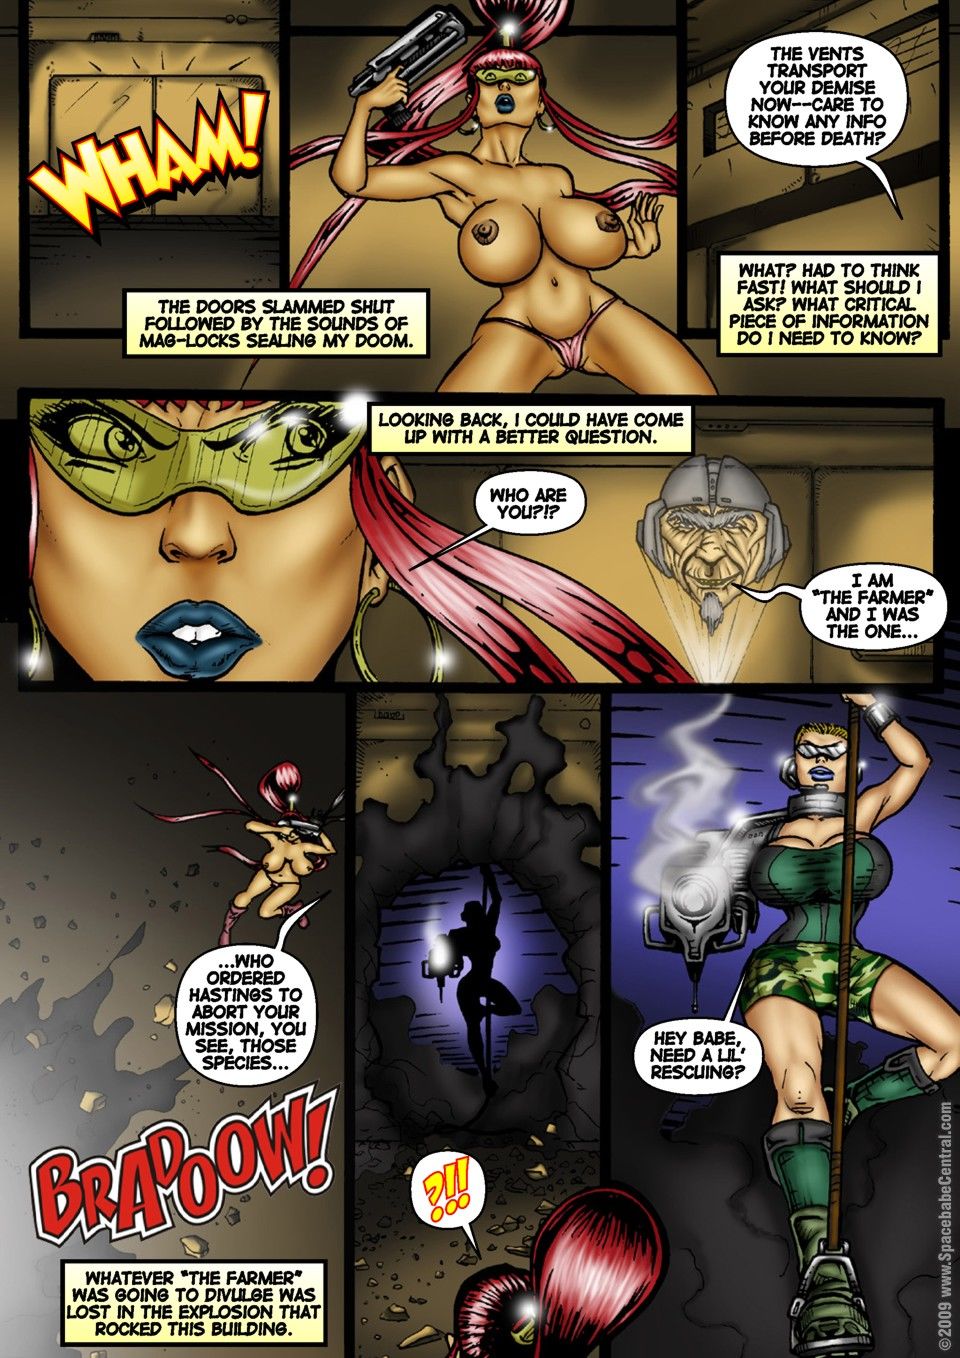 Alien Huntress 16-20 page 1